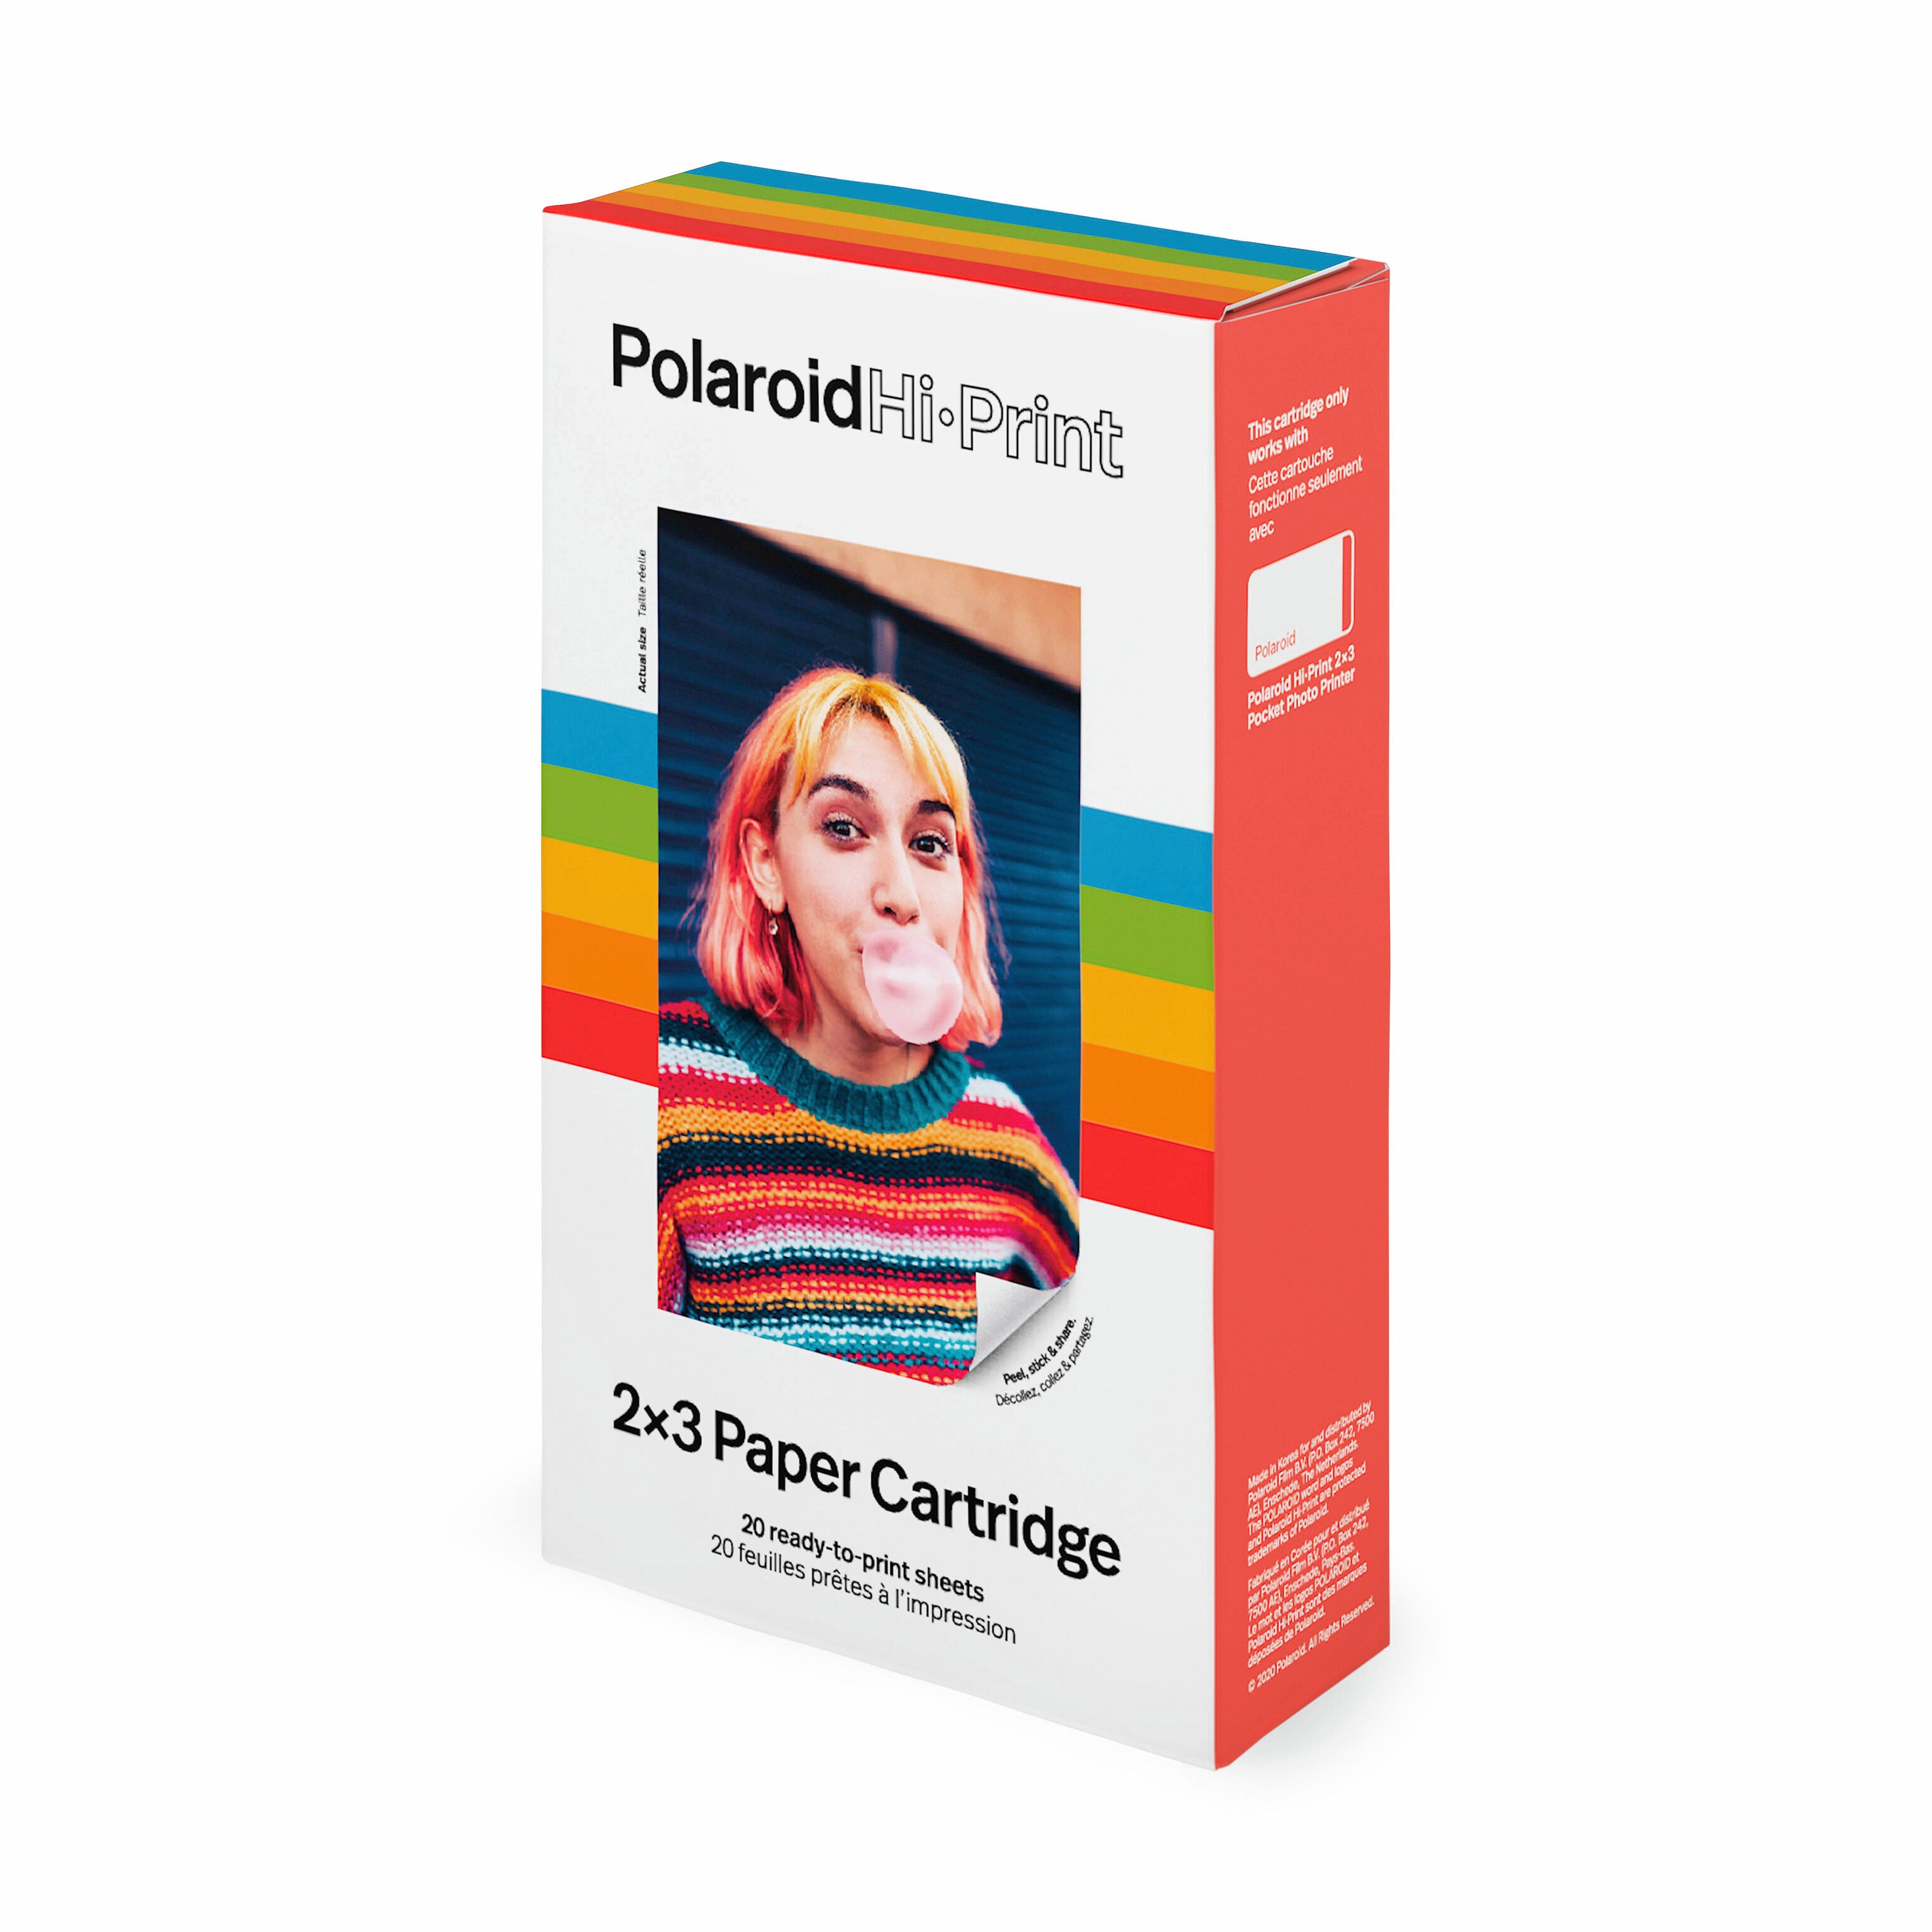 Polaroid Hi-Print 2x3 Pocket Photo Printer - Starter Set – MoMA